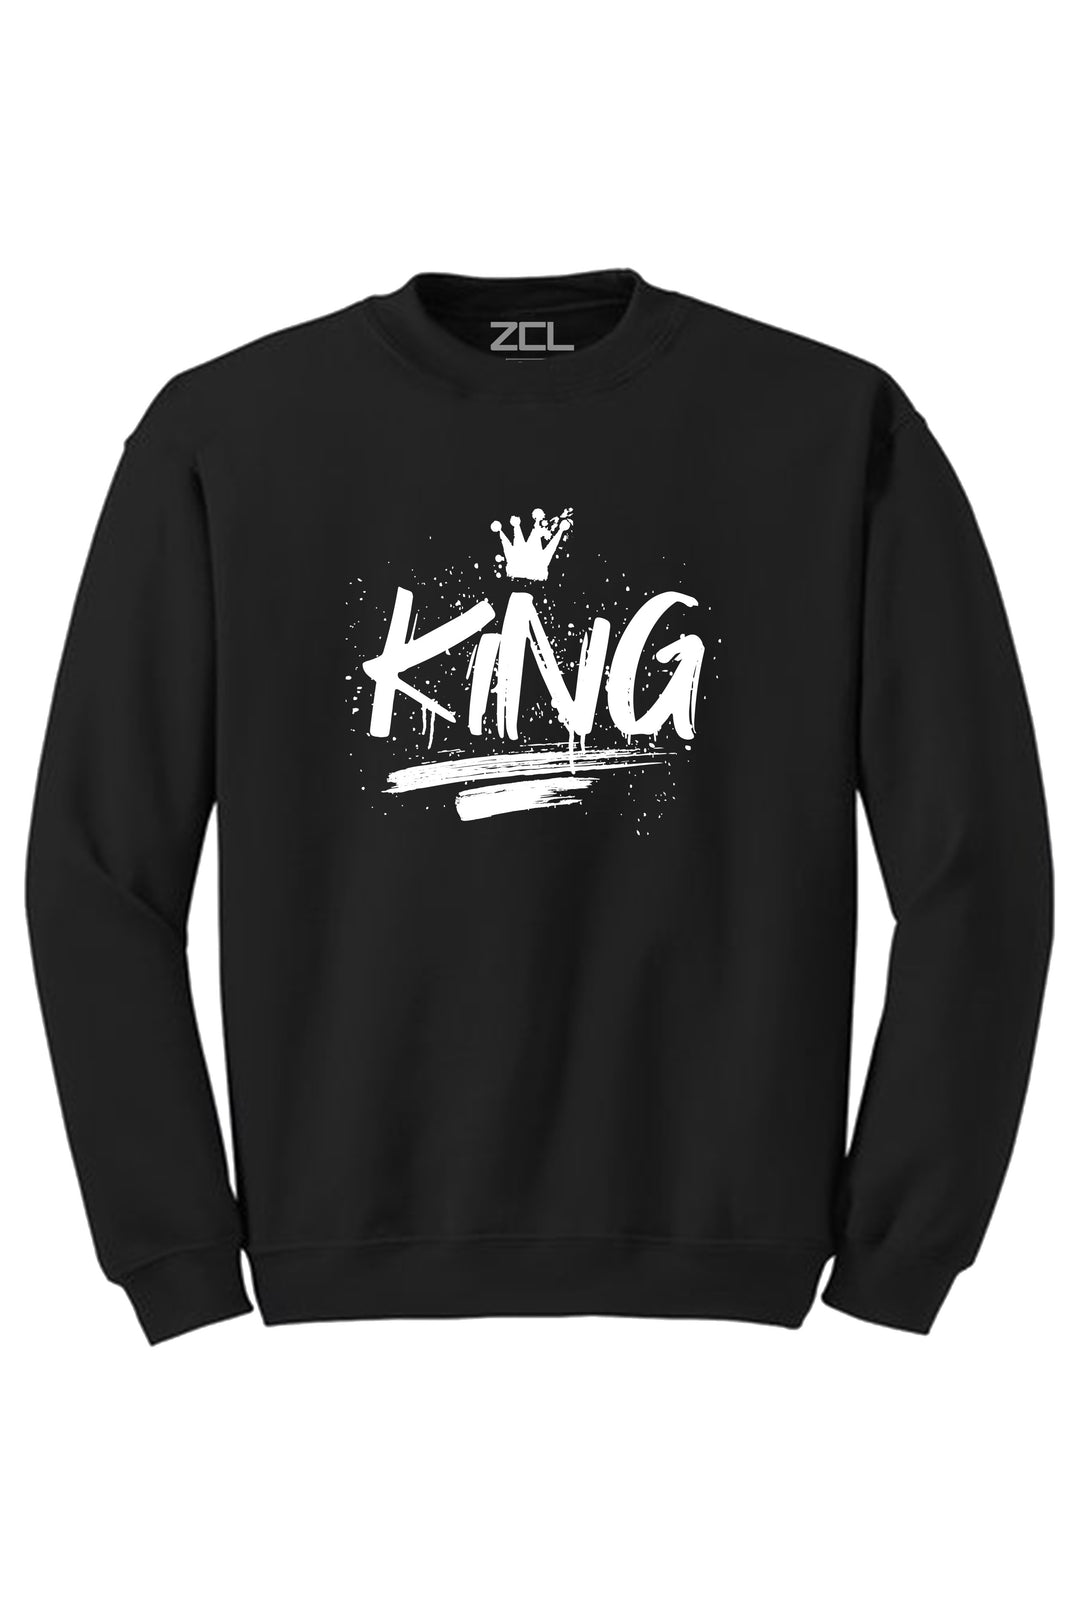 King Crewneck Sweatshirt (White Logo) - Zamage